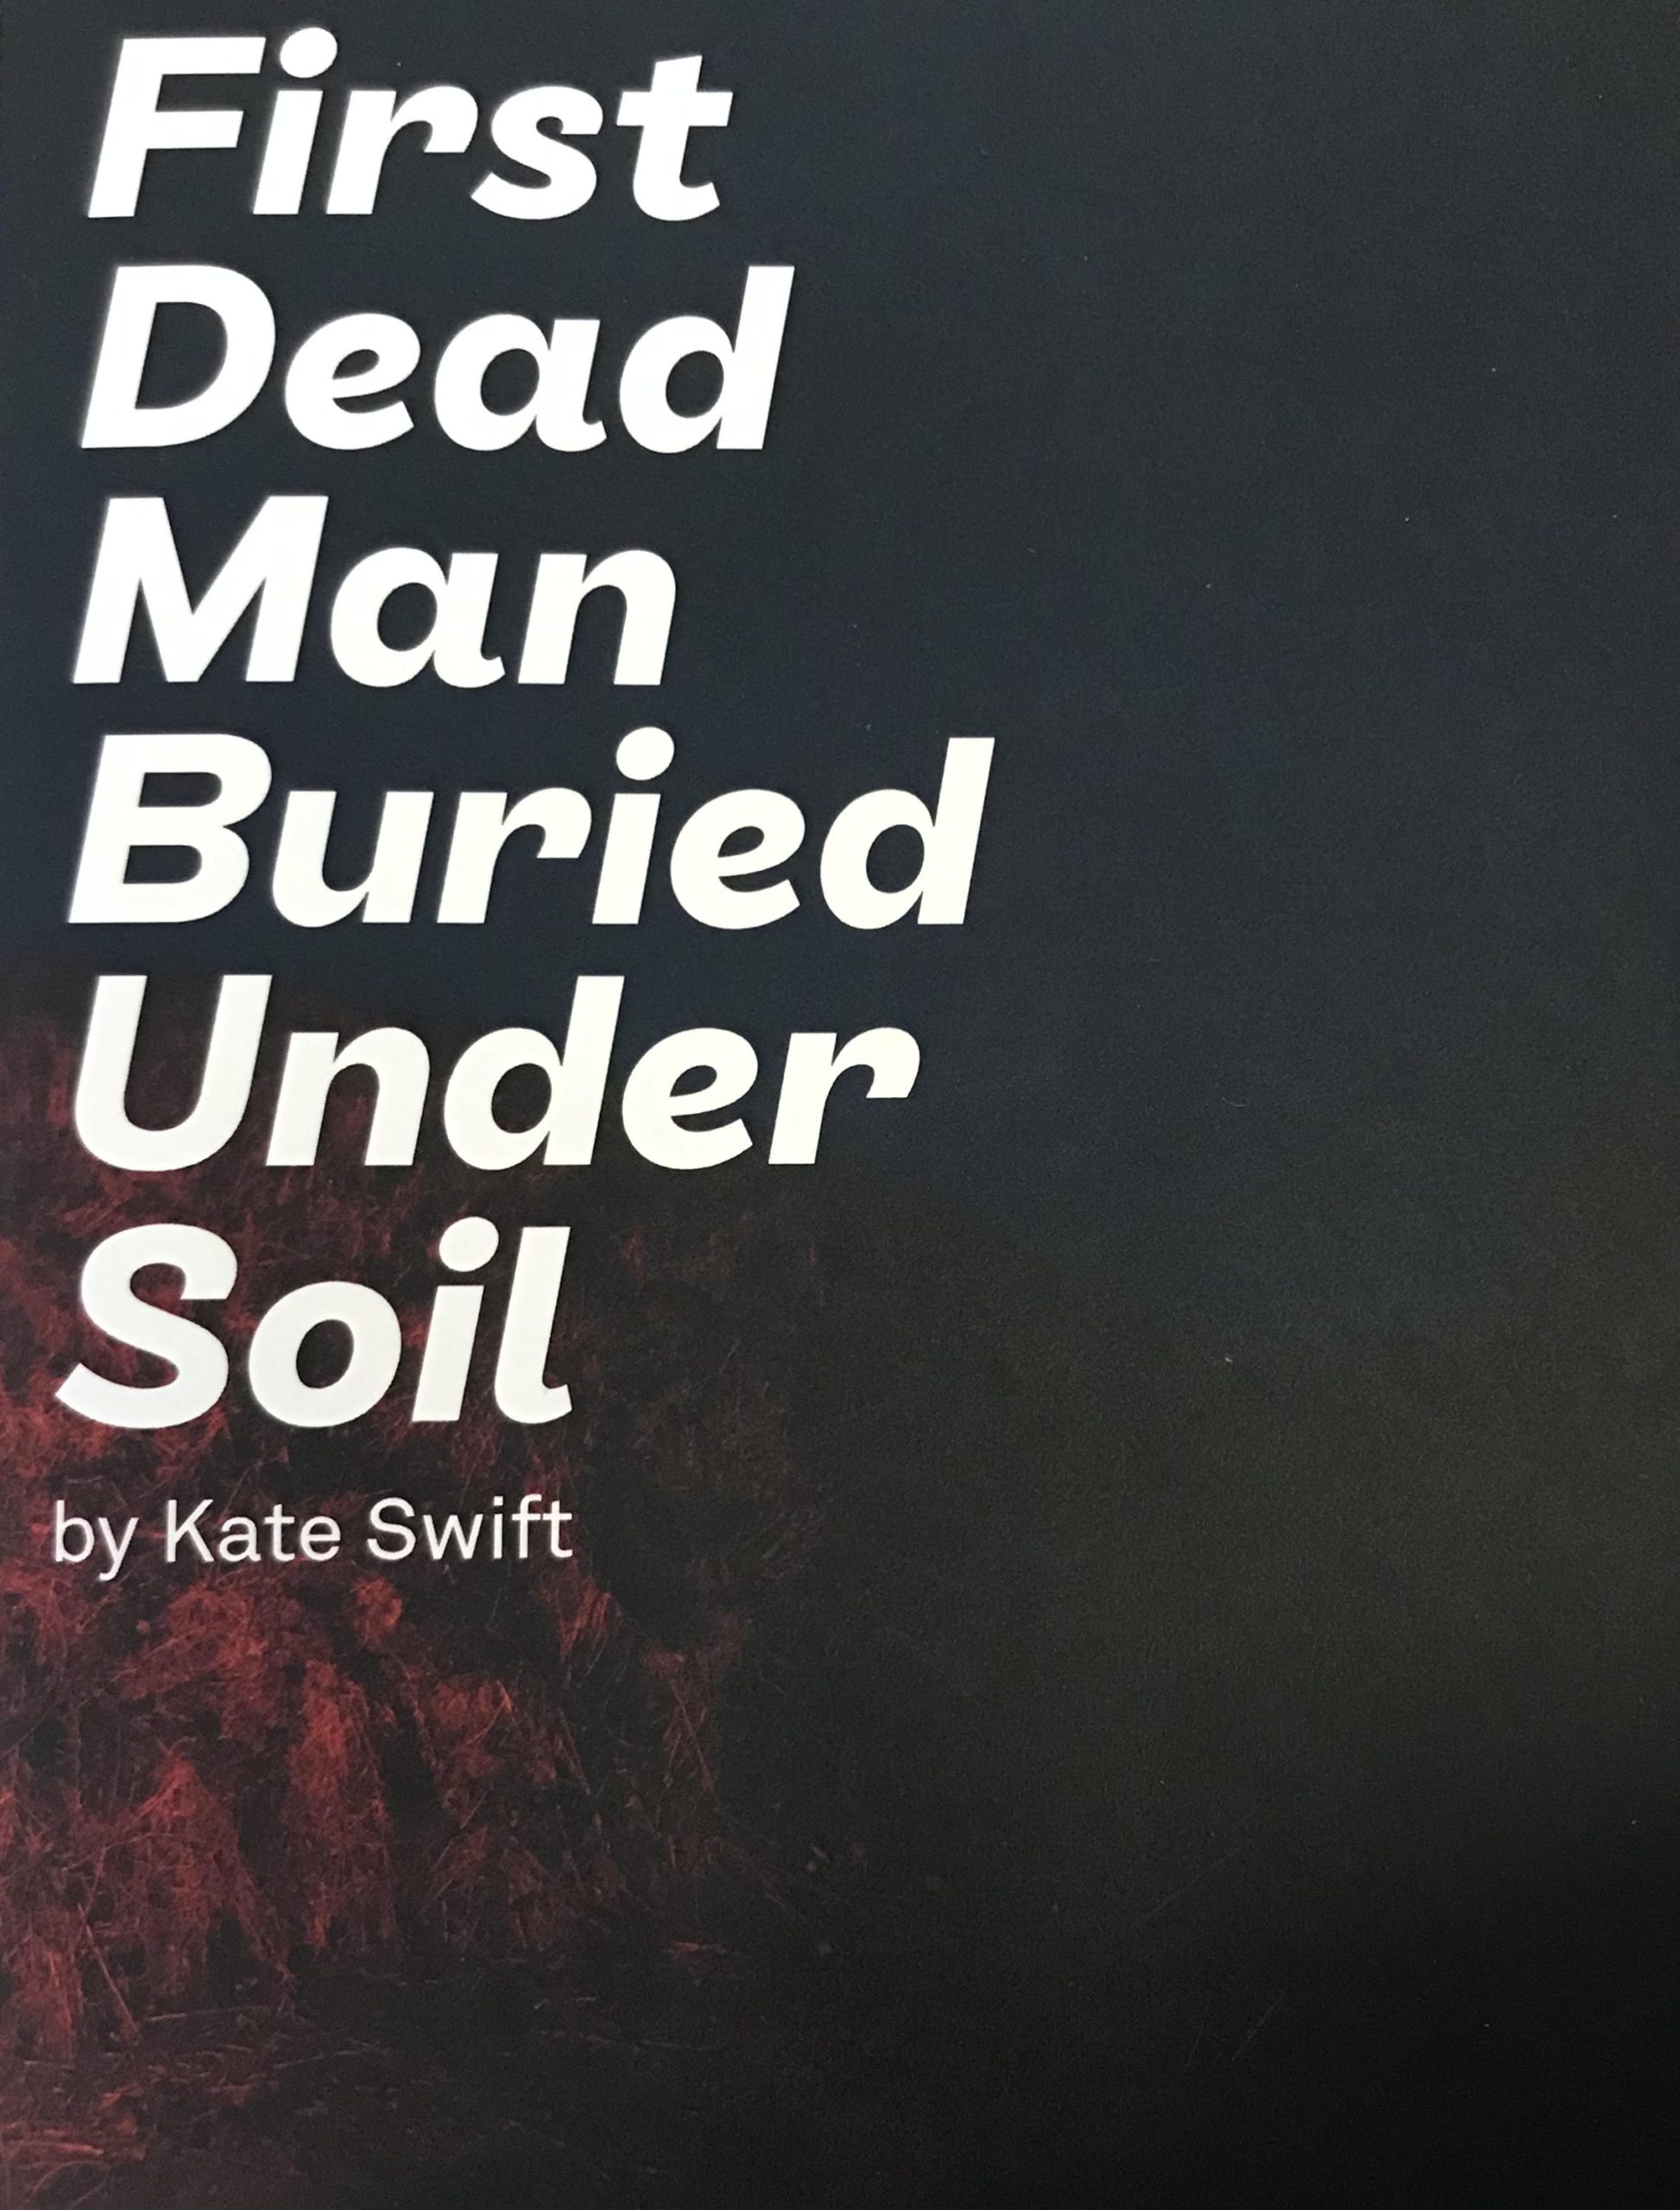 First Dead Man Buried Under Soil, Kate Swift